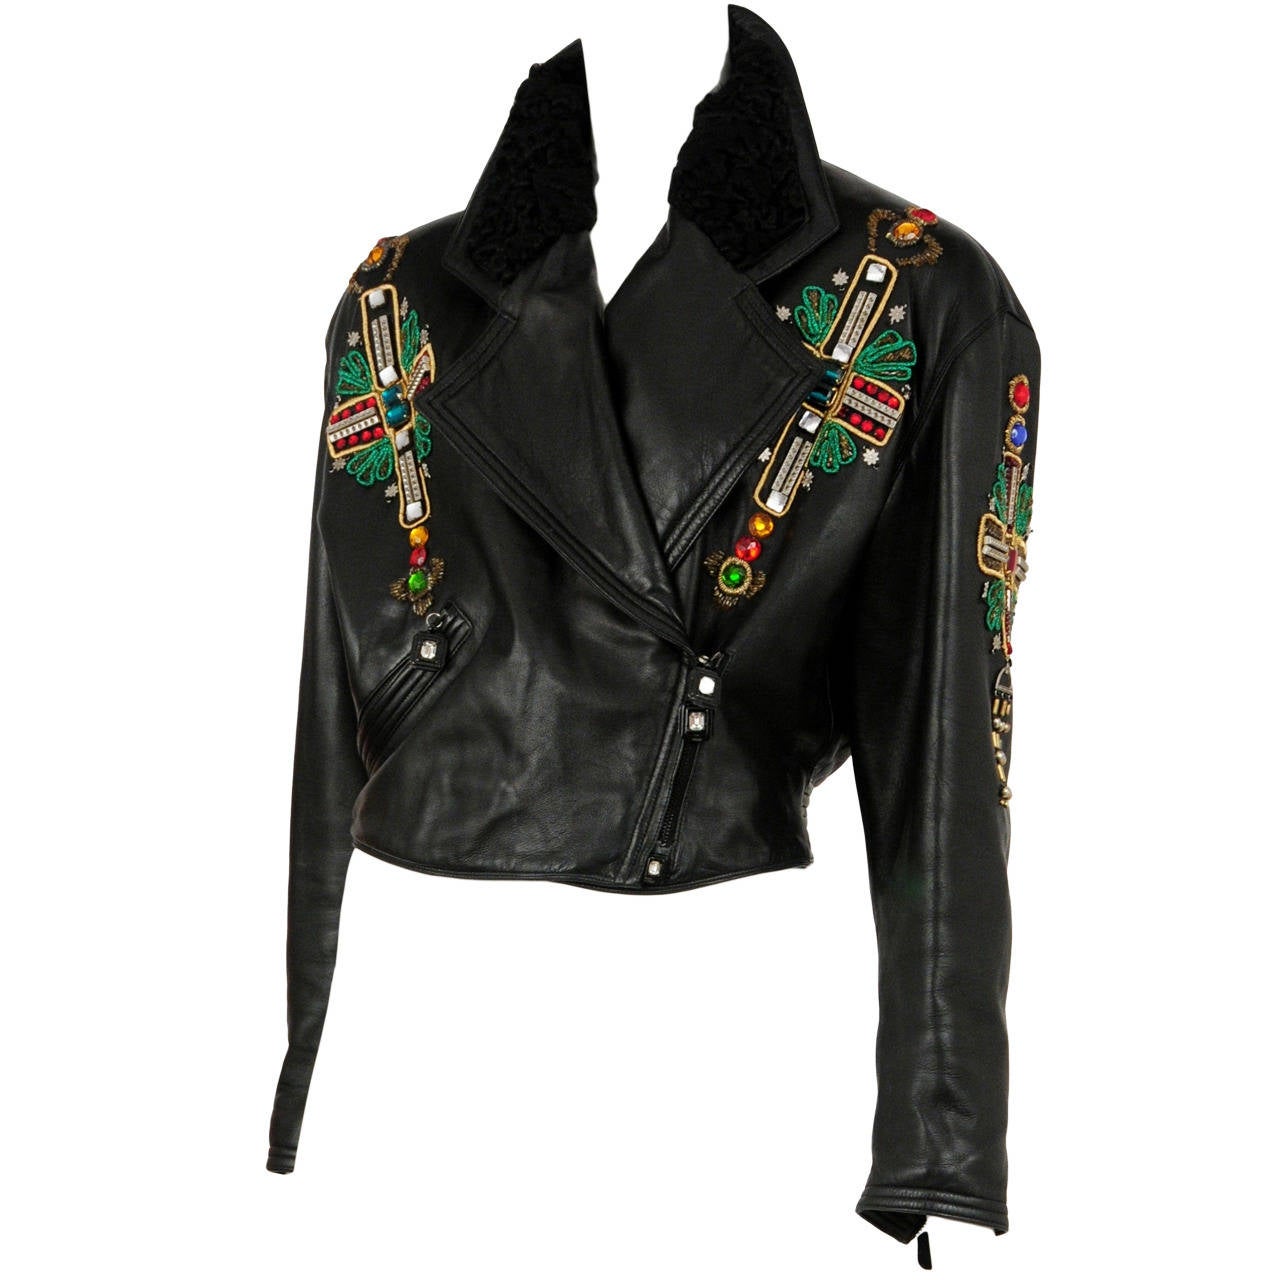 Gianni Versace Black Leather Jacket with Jewel Crosses